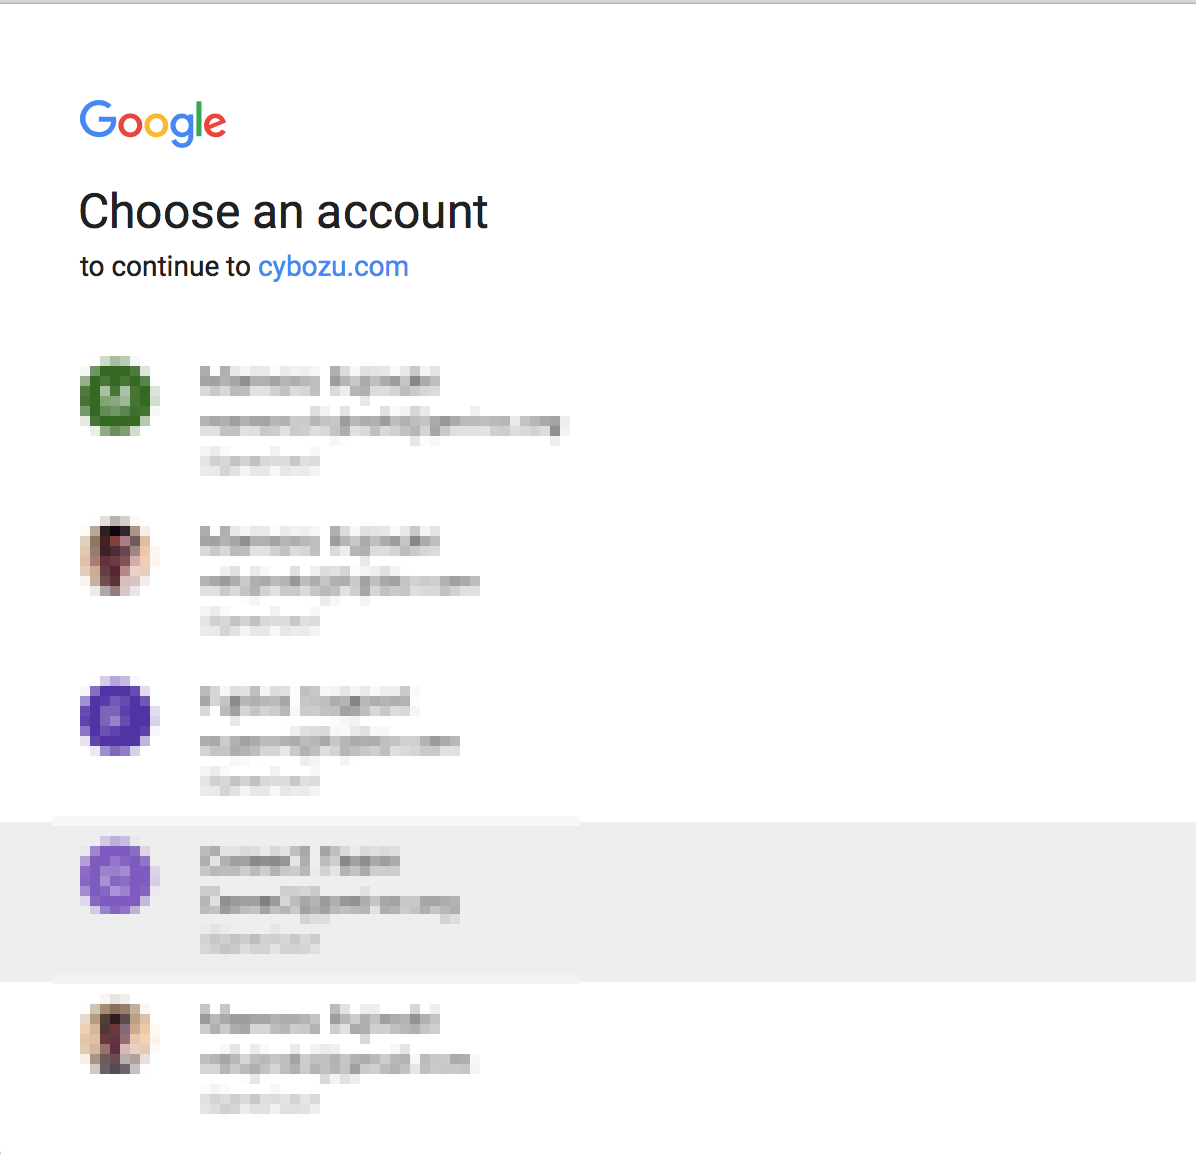 Google アカウントの選択画面が表示されている